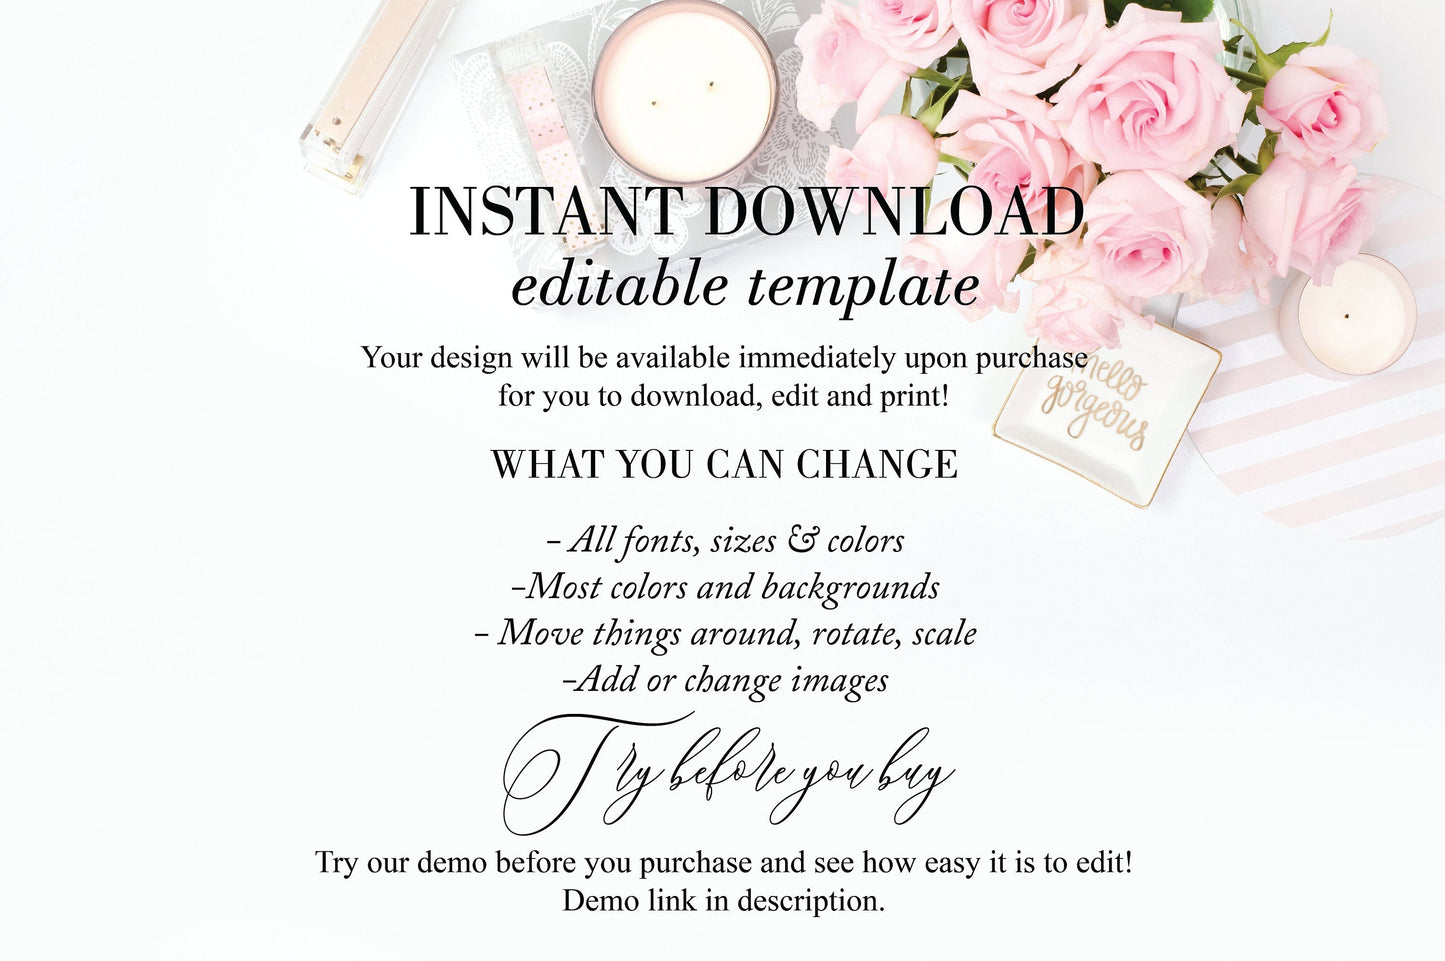 Fall Wedding Program Fan Template Printable Ceremony Programs Card Floral Watercolor Editable Template Instant download - Karen MENU|PROGRAMS|TIMELINE SAVVY PAPER CO